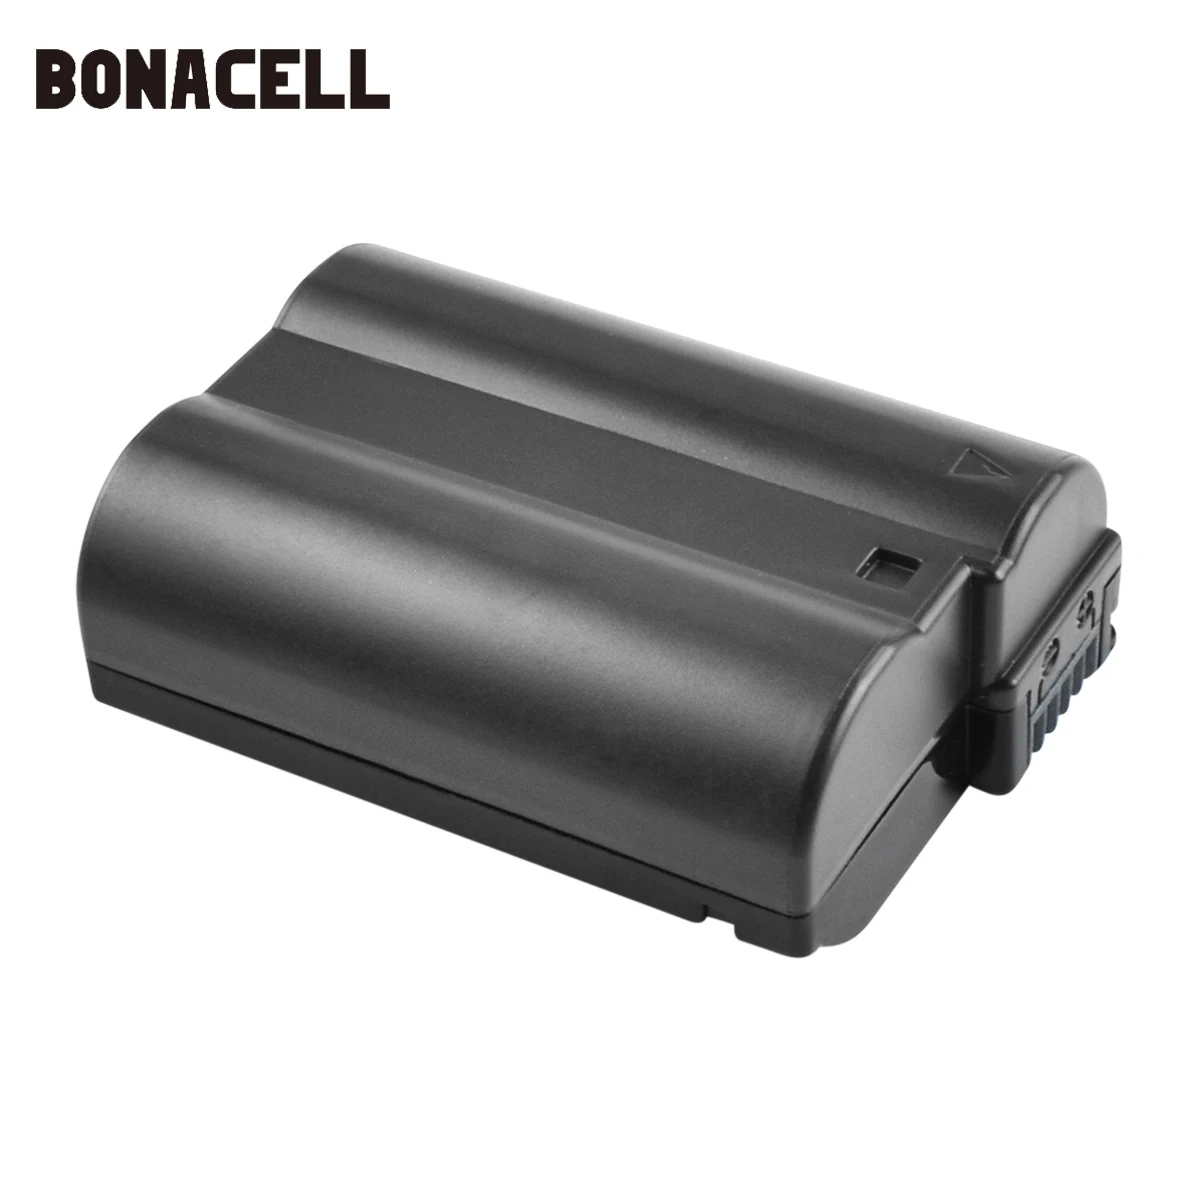 Bonacell 2800 мА/ч, EN-EL15 ENEL15 RU EL15 Камера Батарея+ ЖК-дисплей Зарядное устройство для цифровых зеркальных фотокамер Nikon D600 D610 D800 D800E D810 D7000 D7100 L50